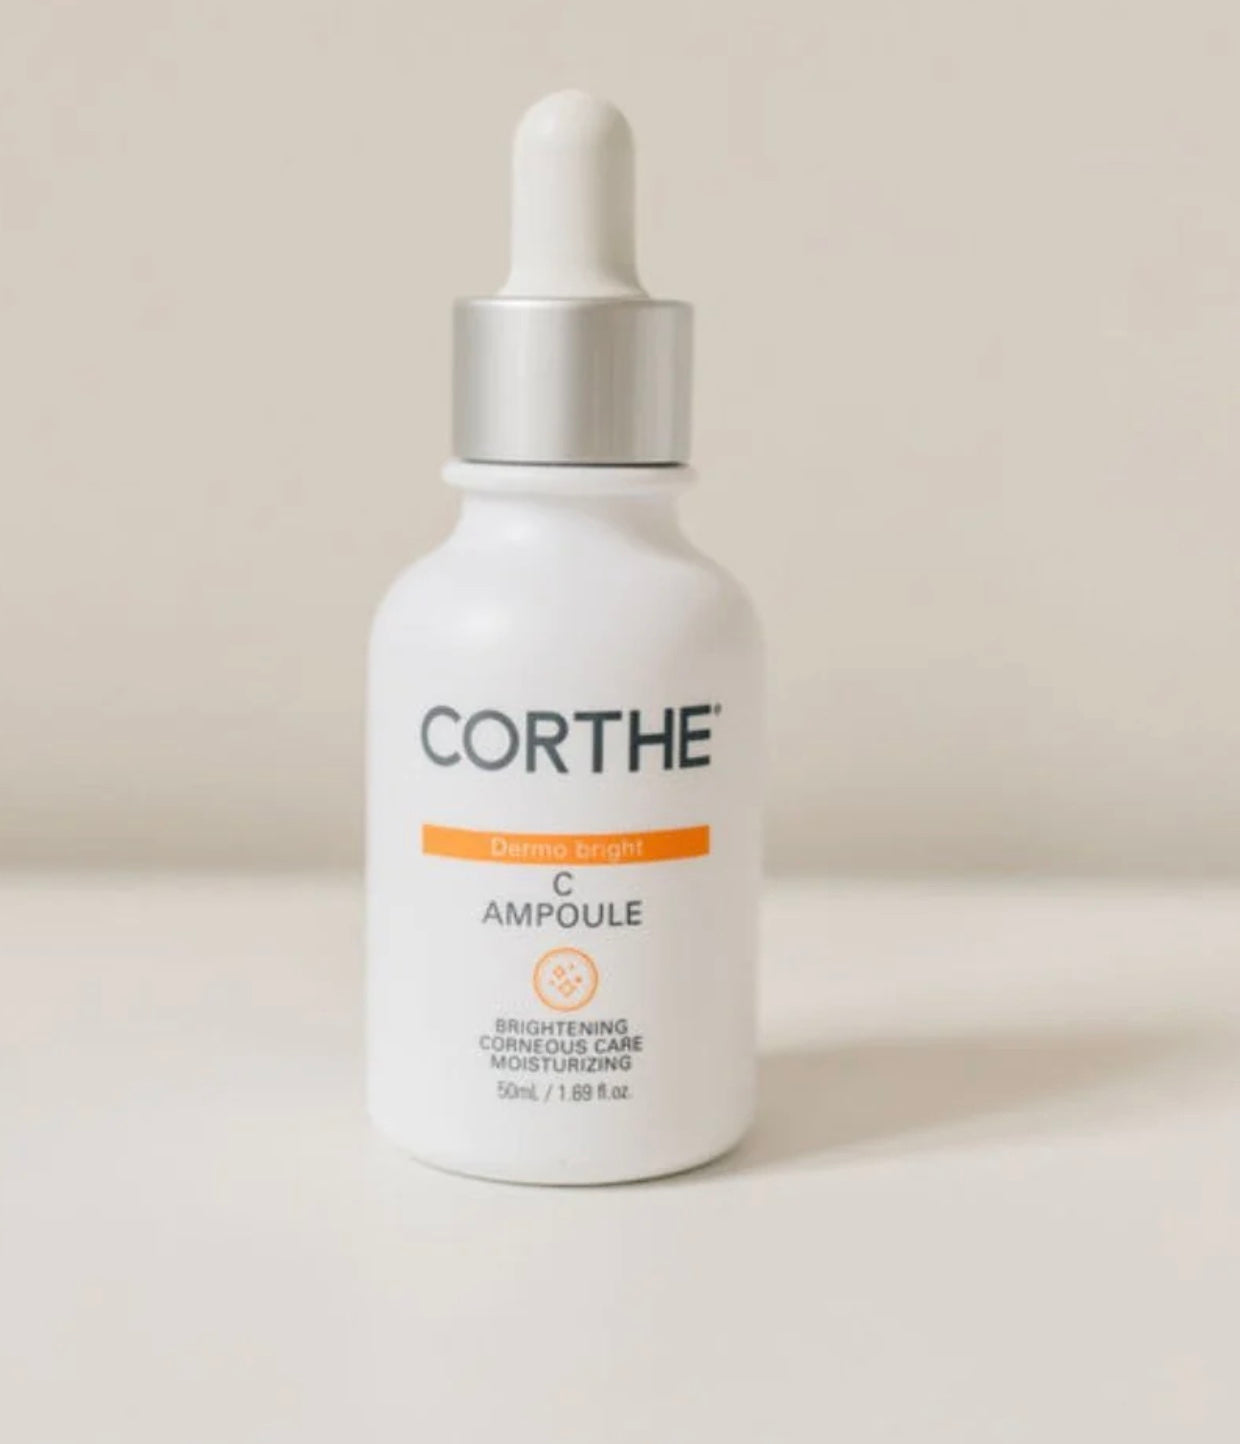 Corthe Brightening Skincare Bundle